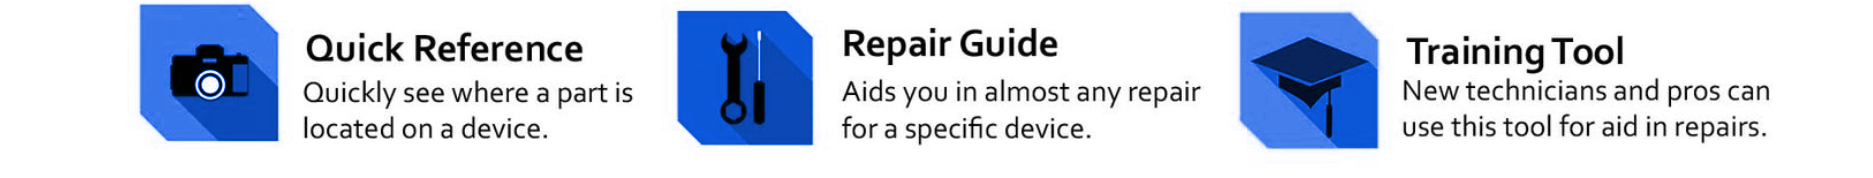 Apple iPhone 8 Plus Repair Non-Magnetic Screw Mat RepairX Hero